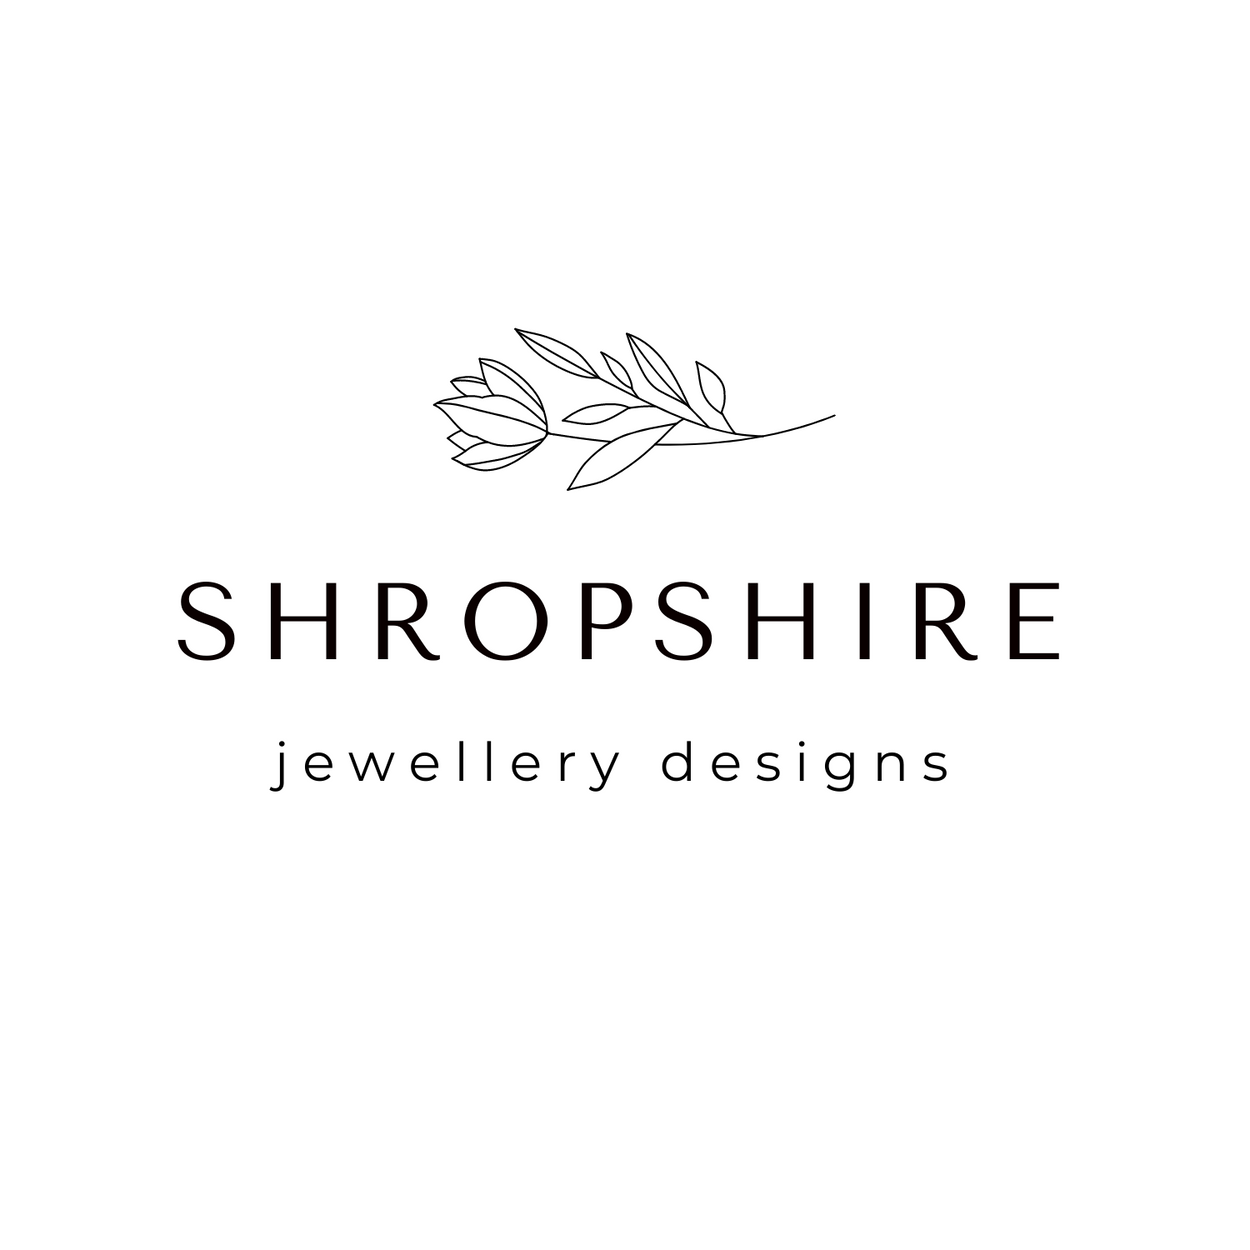 www.shropshirejewellerydesigns.co.uk